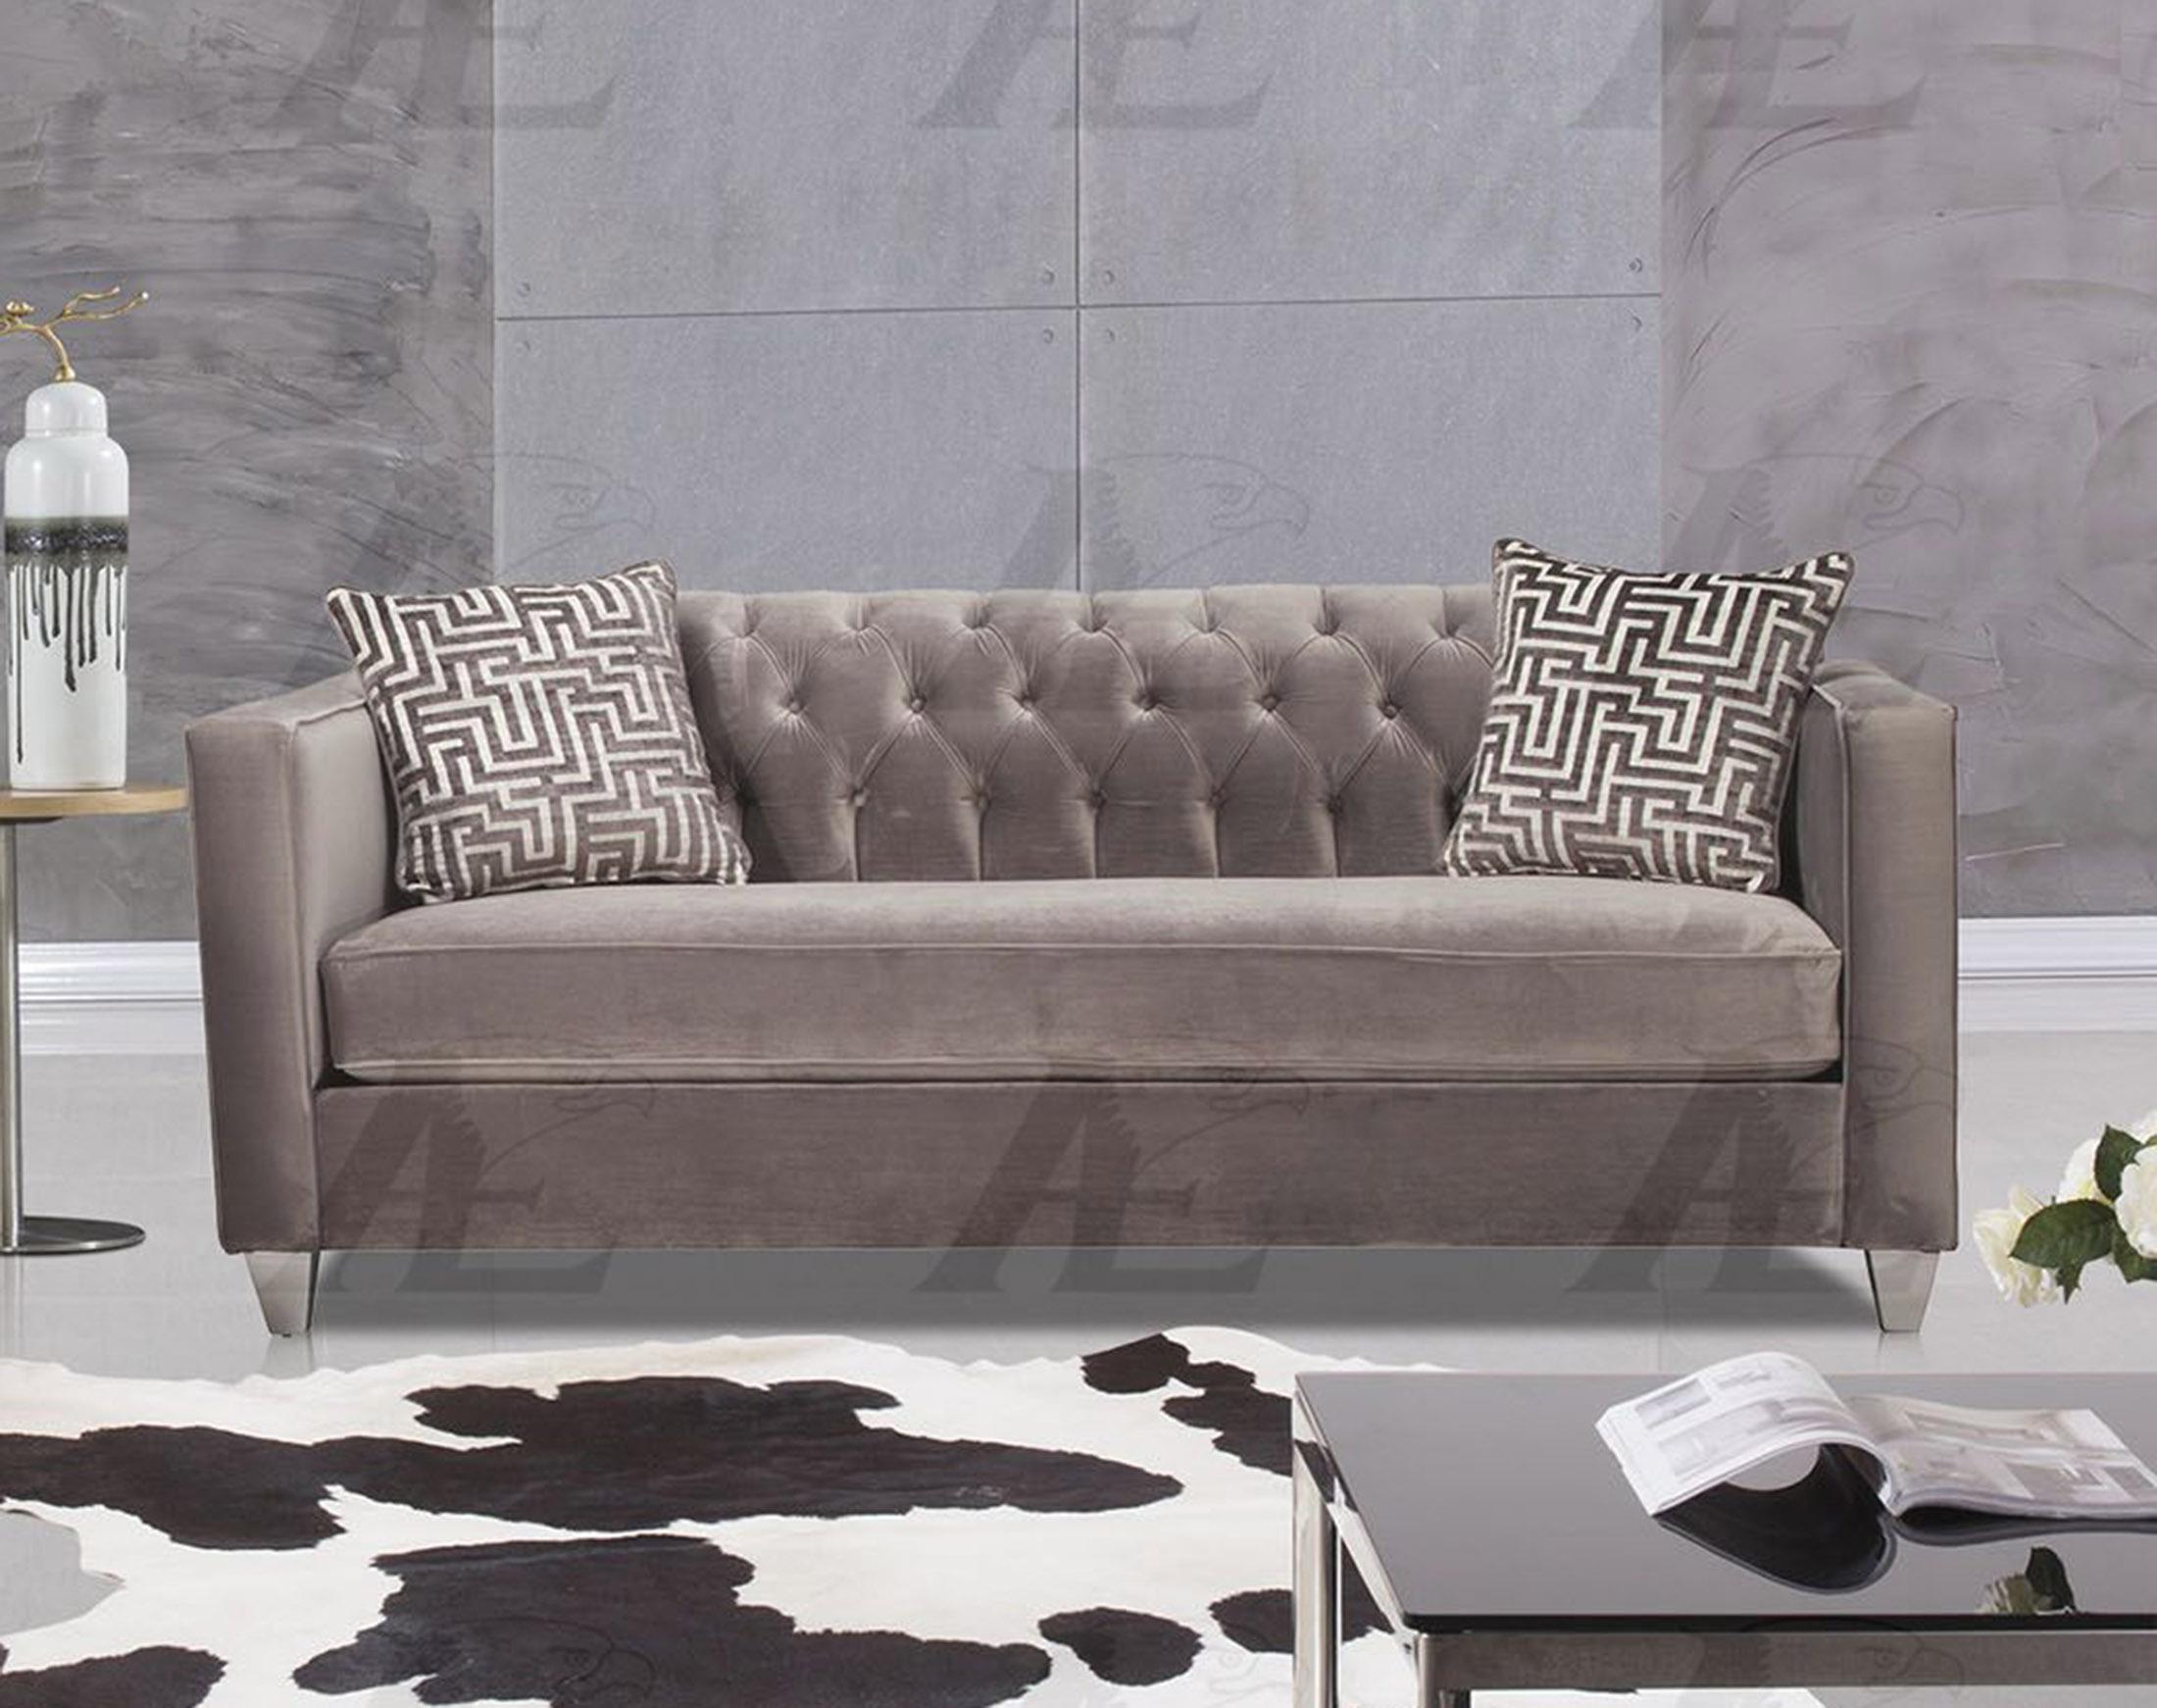 

    
American Eagle Furniture AE2602-GR Gray Tufted Sofa Fabric Contemporary
